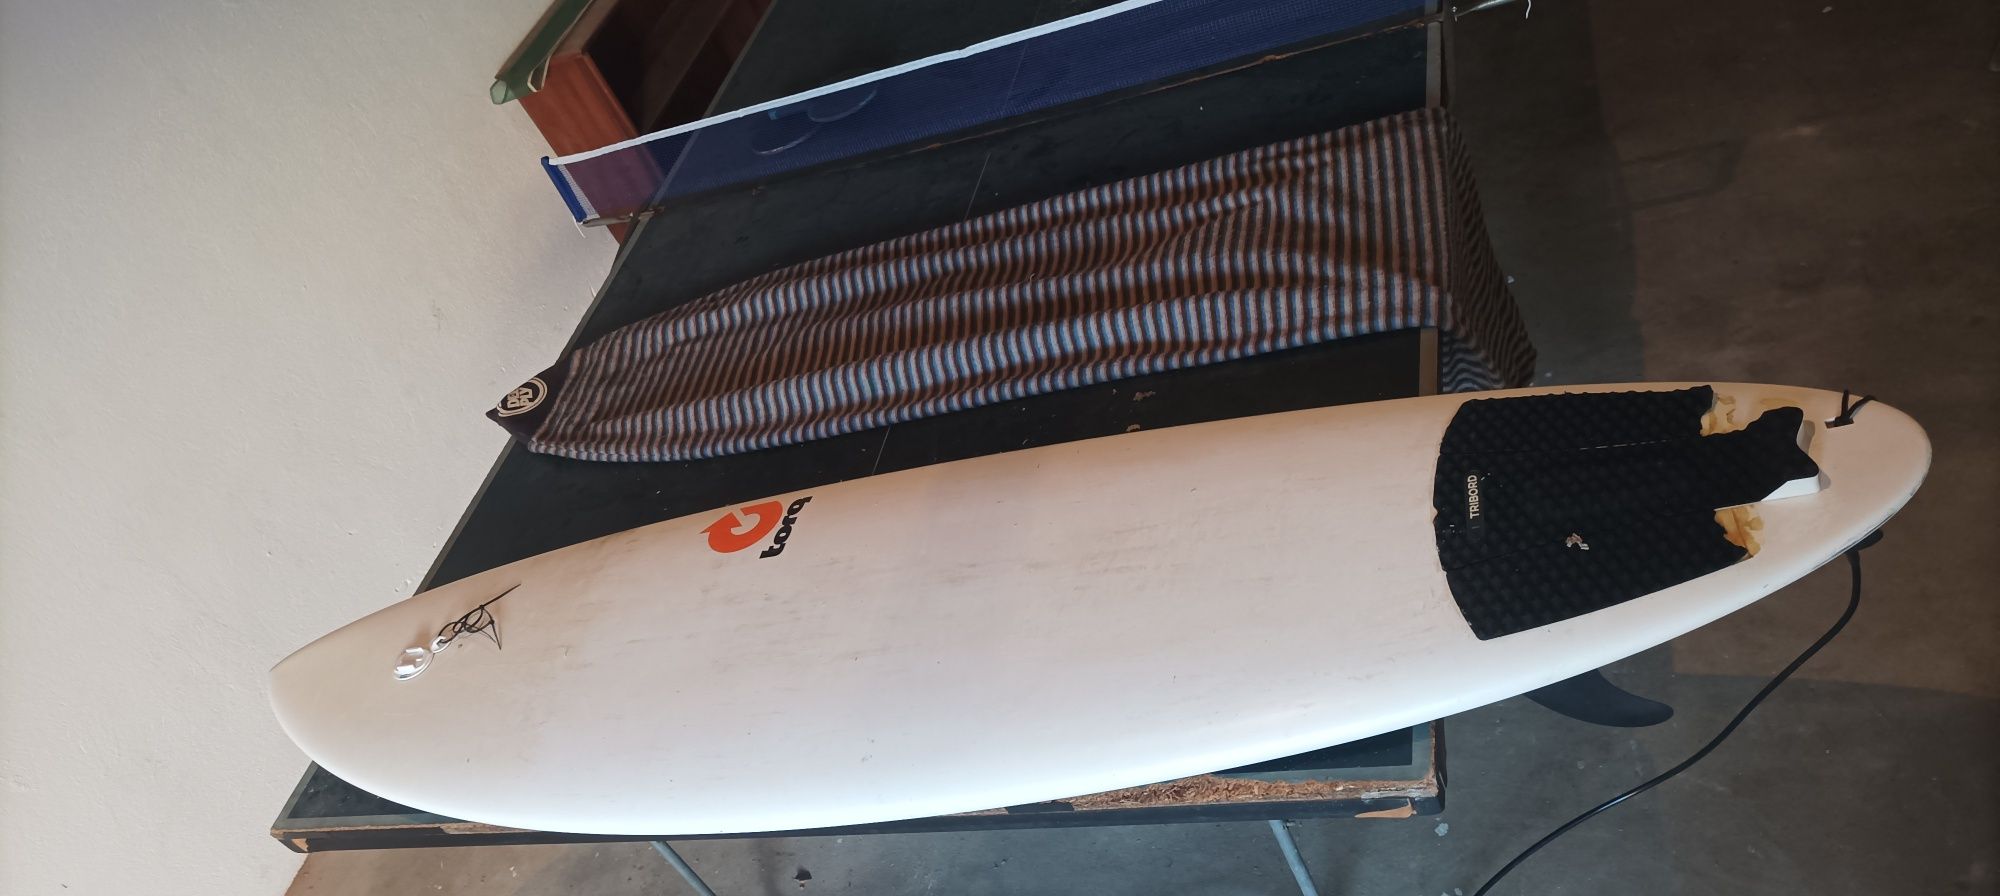 Prancha surf 6'8 torq com capa deeply